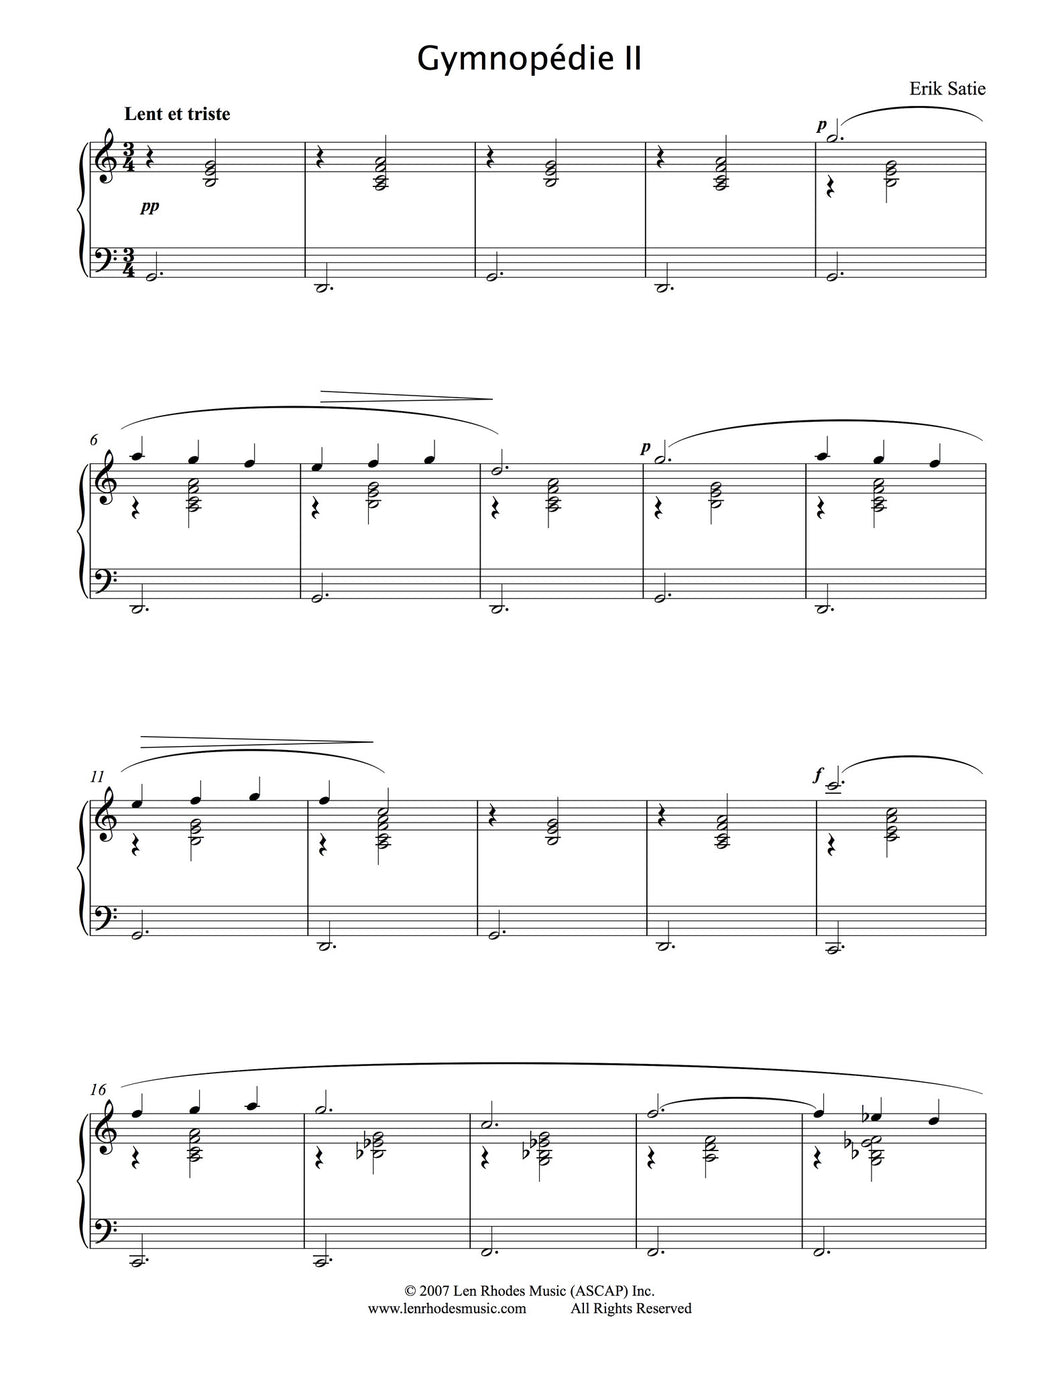 Gymnopédie II in C, Erik Satie - Piano